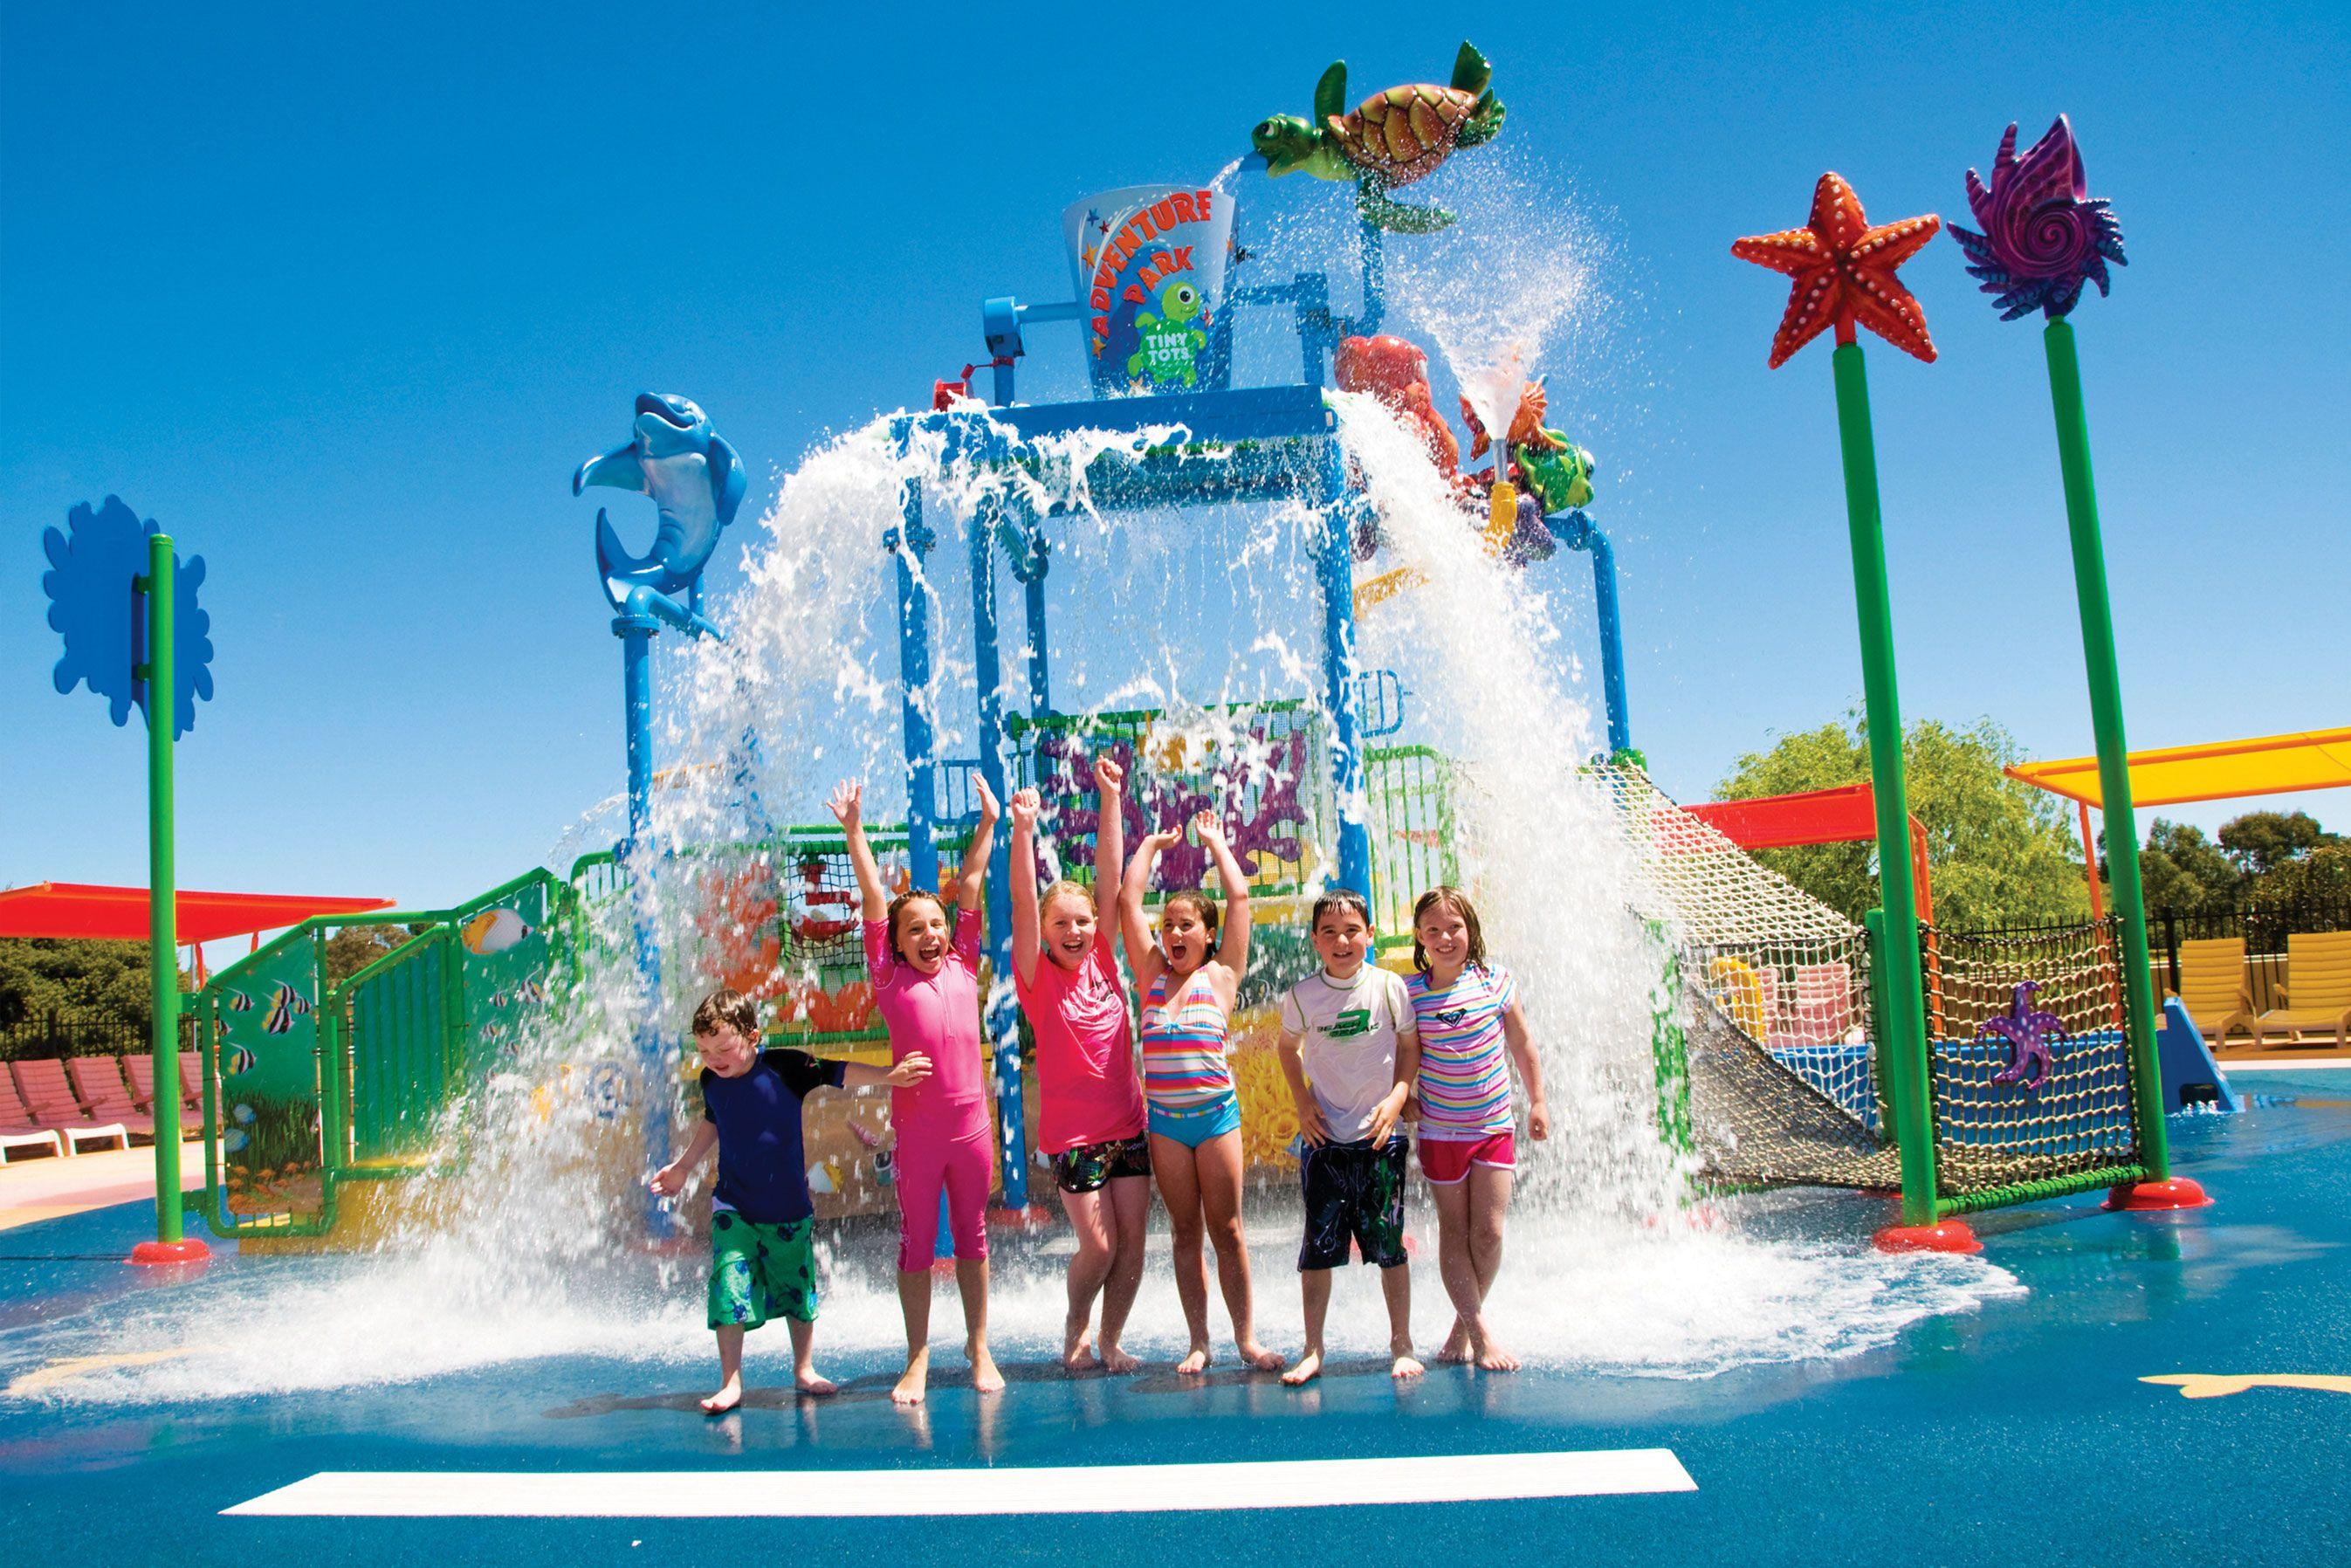 Little kids getting splashed on the Tiny Tots splash zone